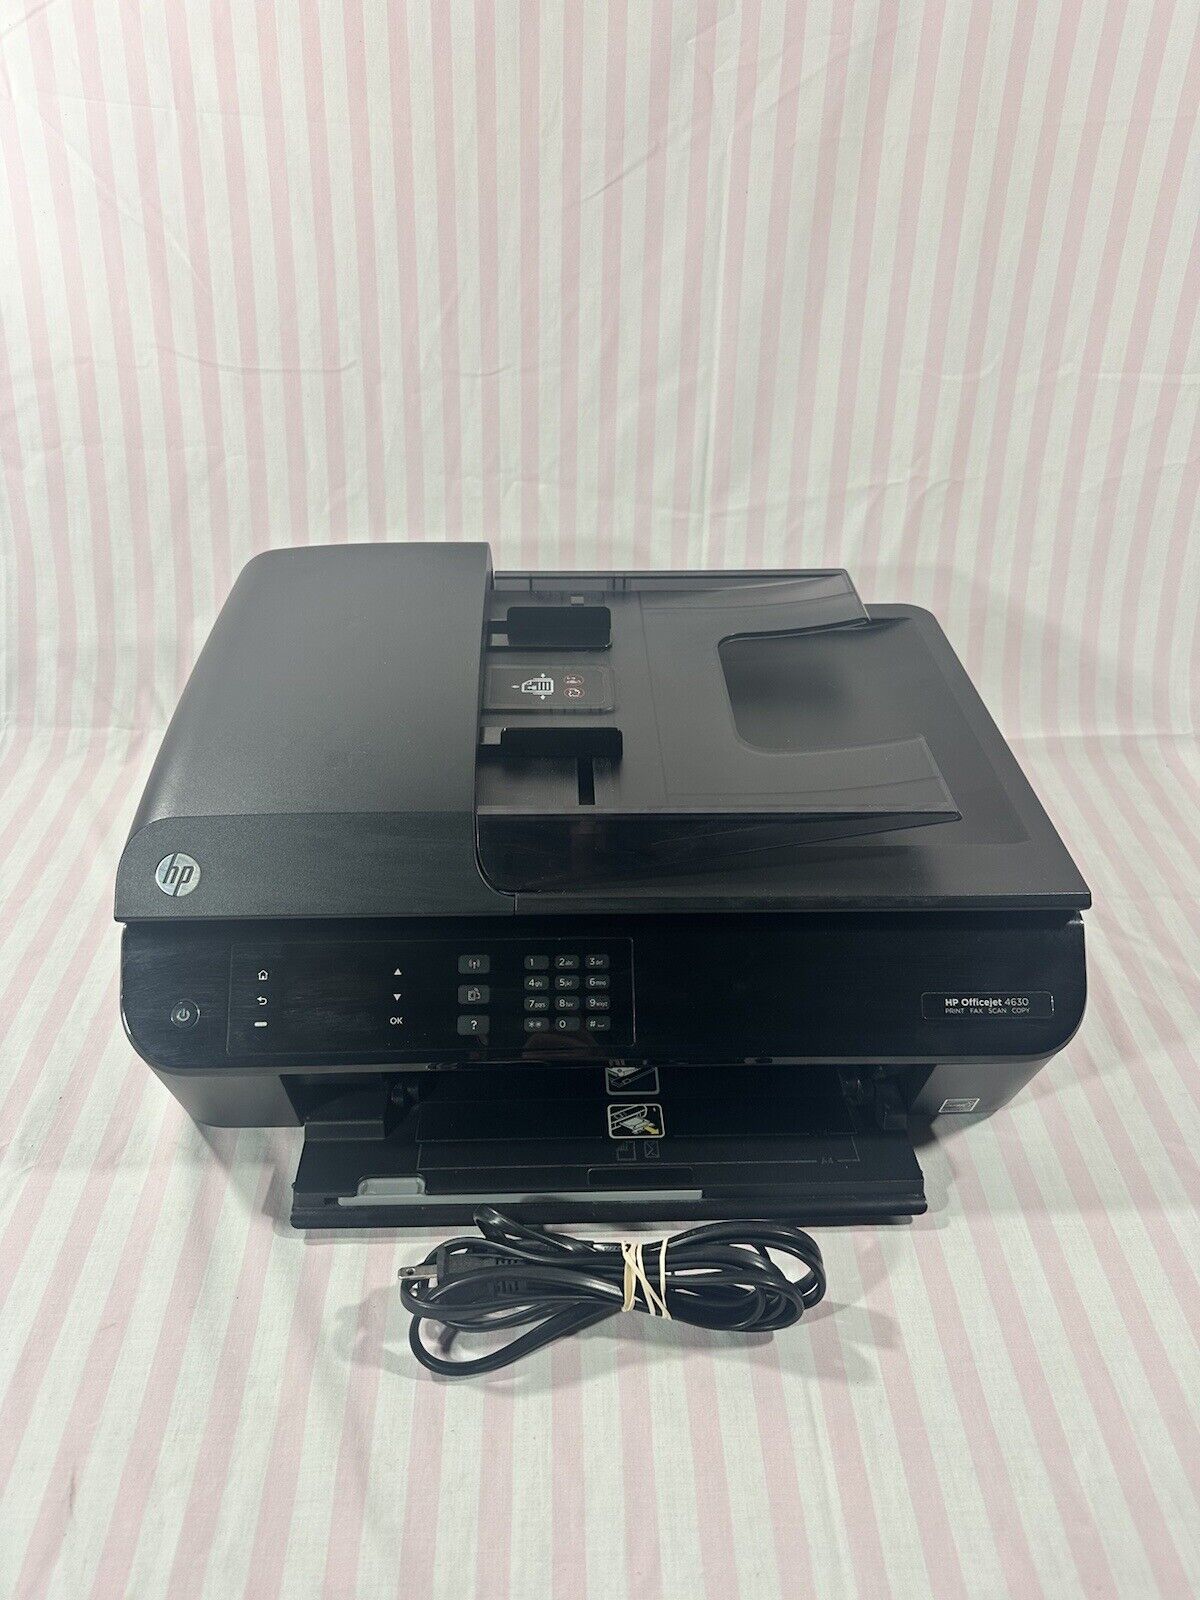 HP Officejet 4630 All-In-One Inkjet Printer